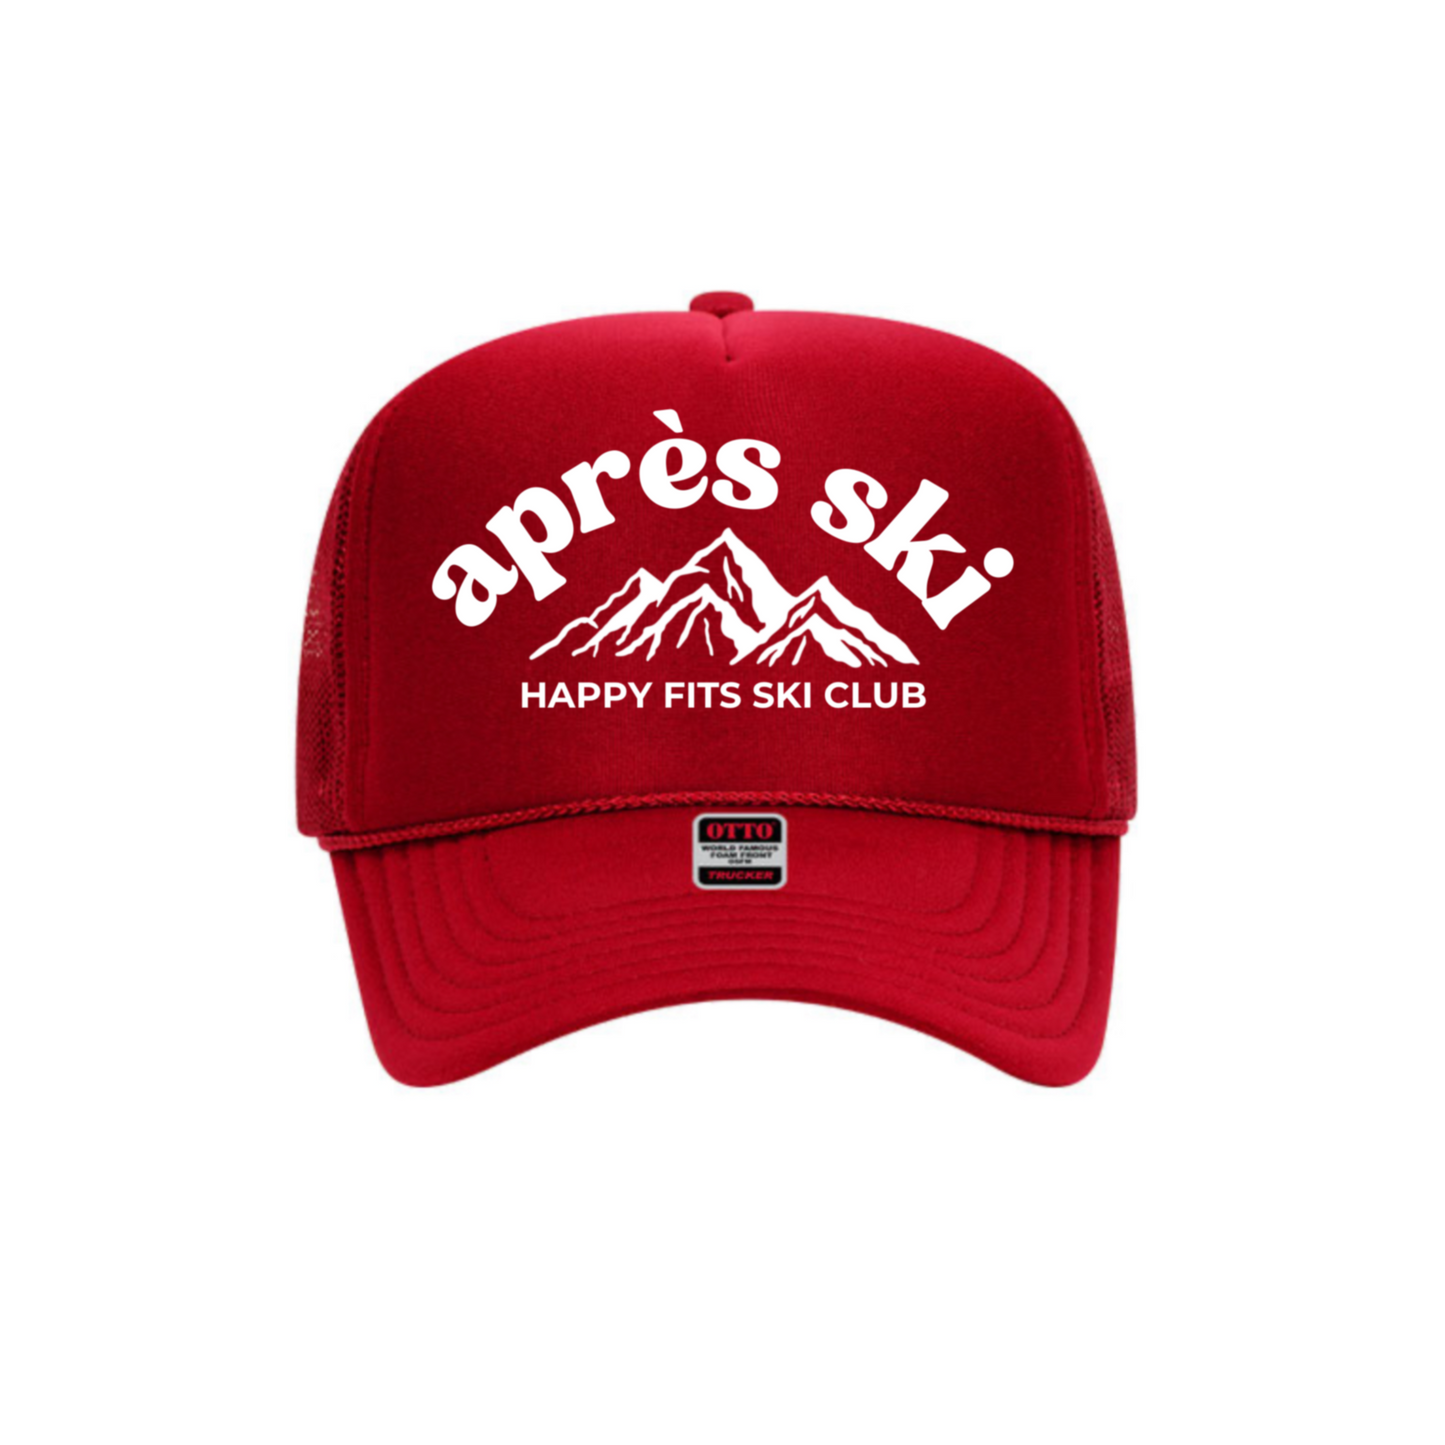 apres ski trucker hat